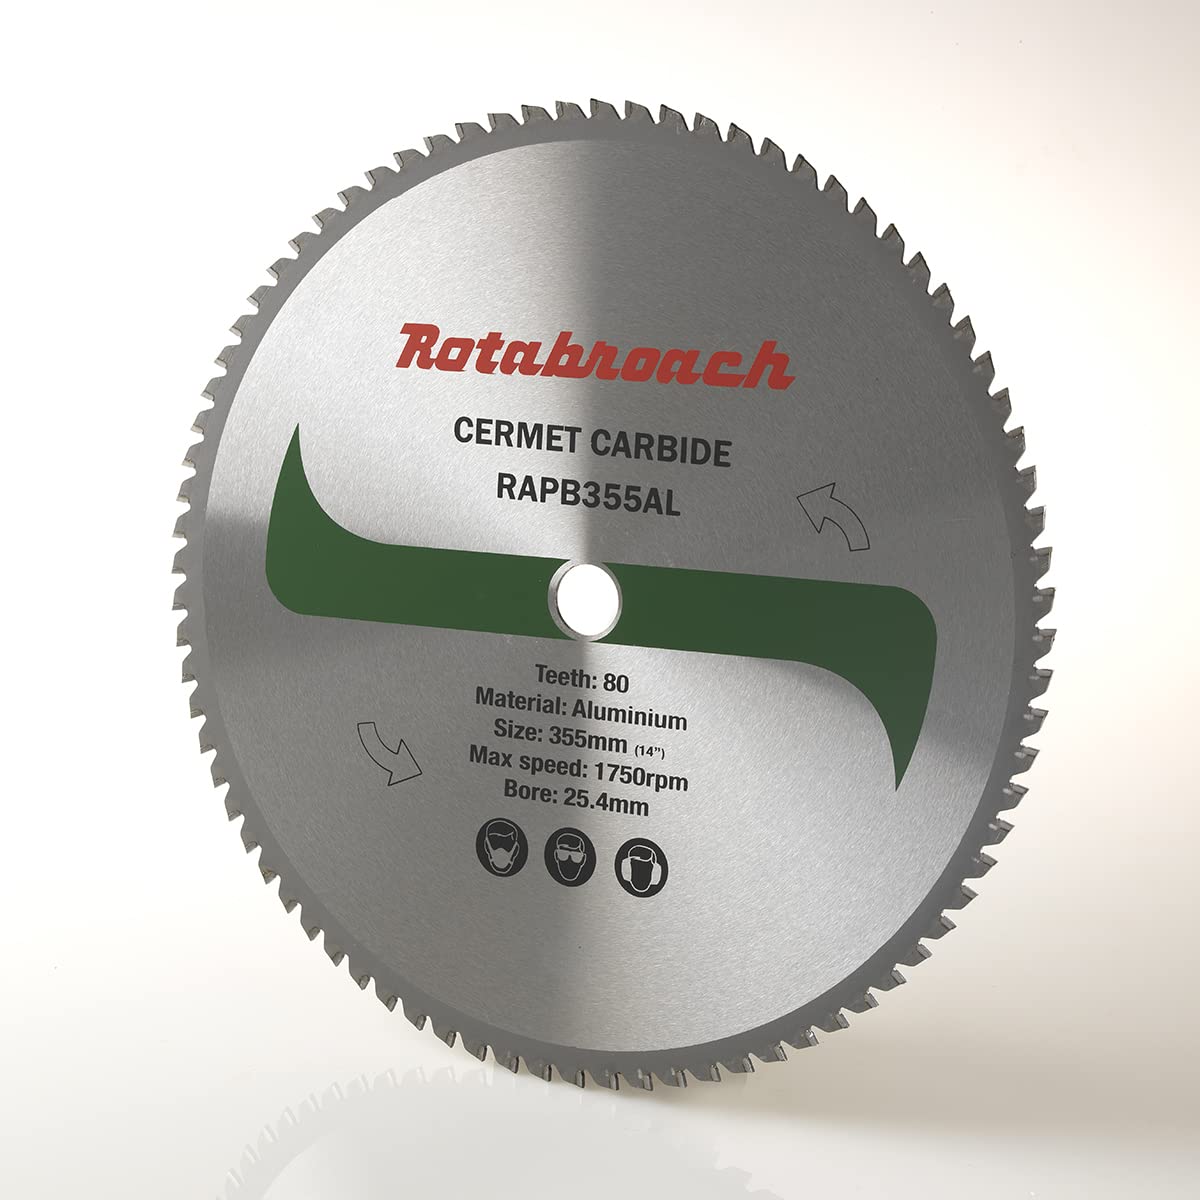 Rotabroach Kappsägeblatt für Aluminium – RAPB355AL Metallschneideblatt mit Cermet-Spitze für Kreissägen | 355 mm langlebiger Fräser hohe maximale Geschwindigkeit 1750 U/min